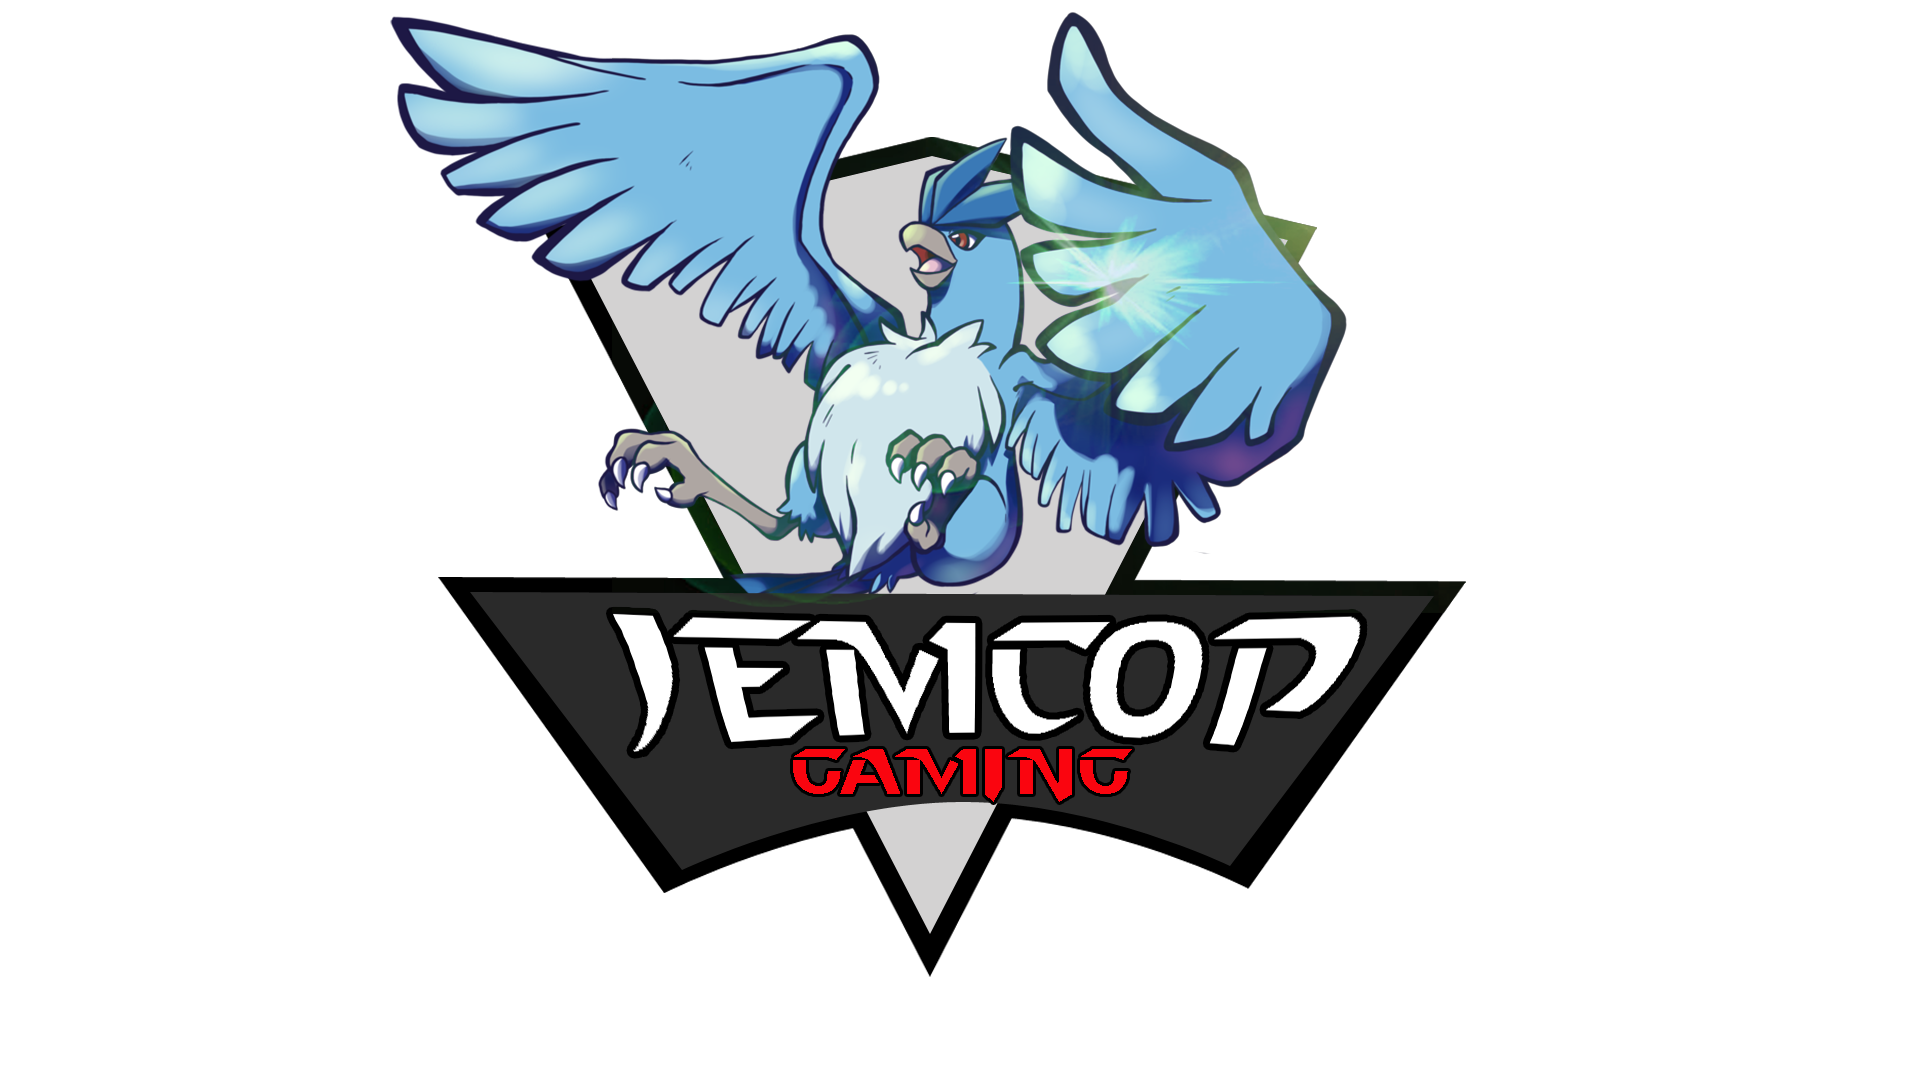 JemcoP.Gaming